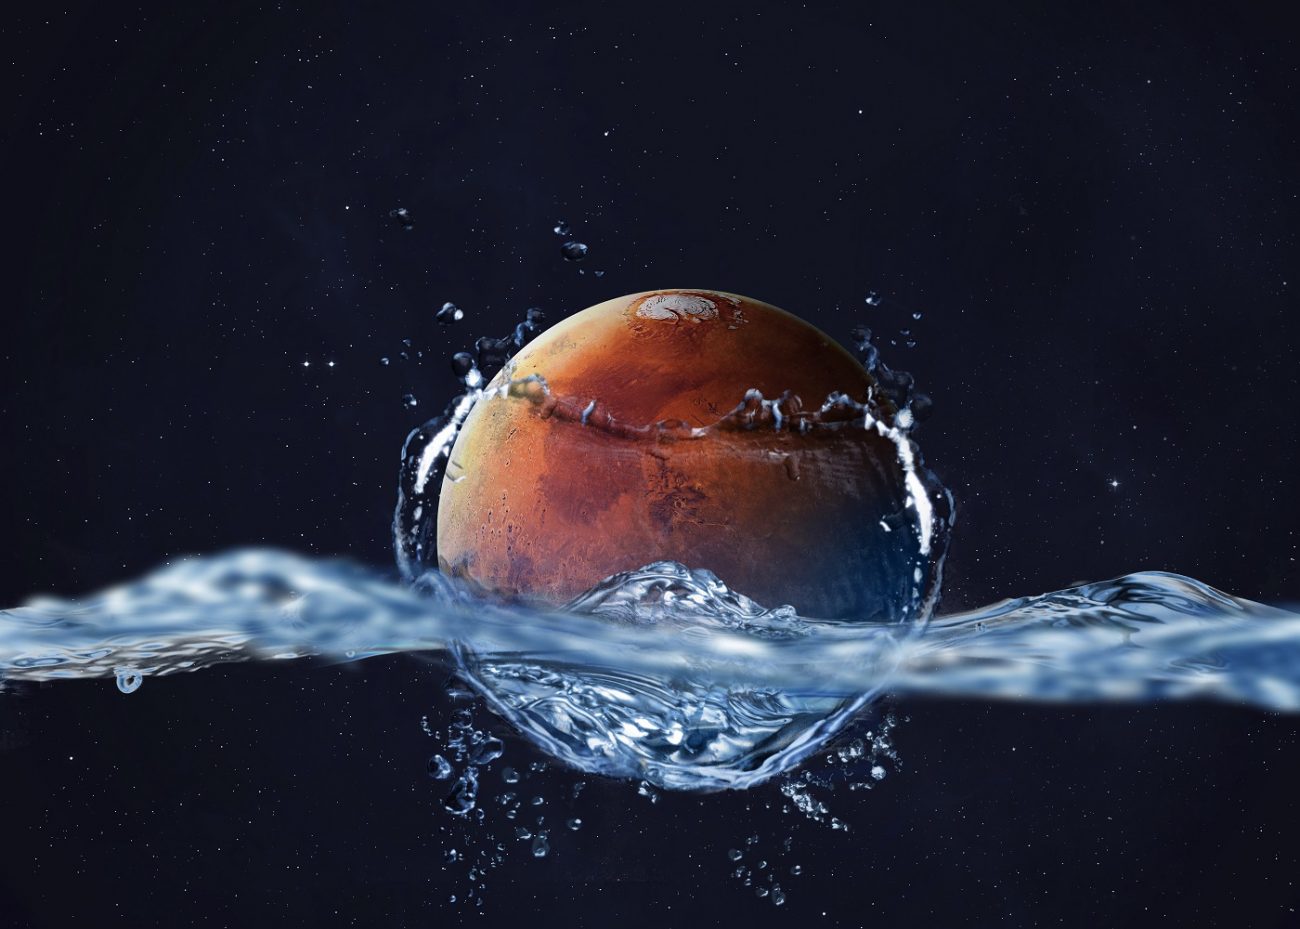 Mars had an abundance of liquid water on its surface. Shutterstock.